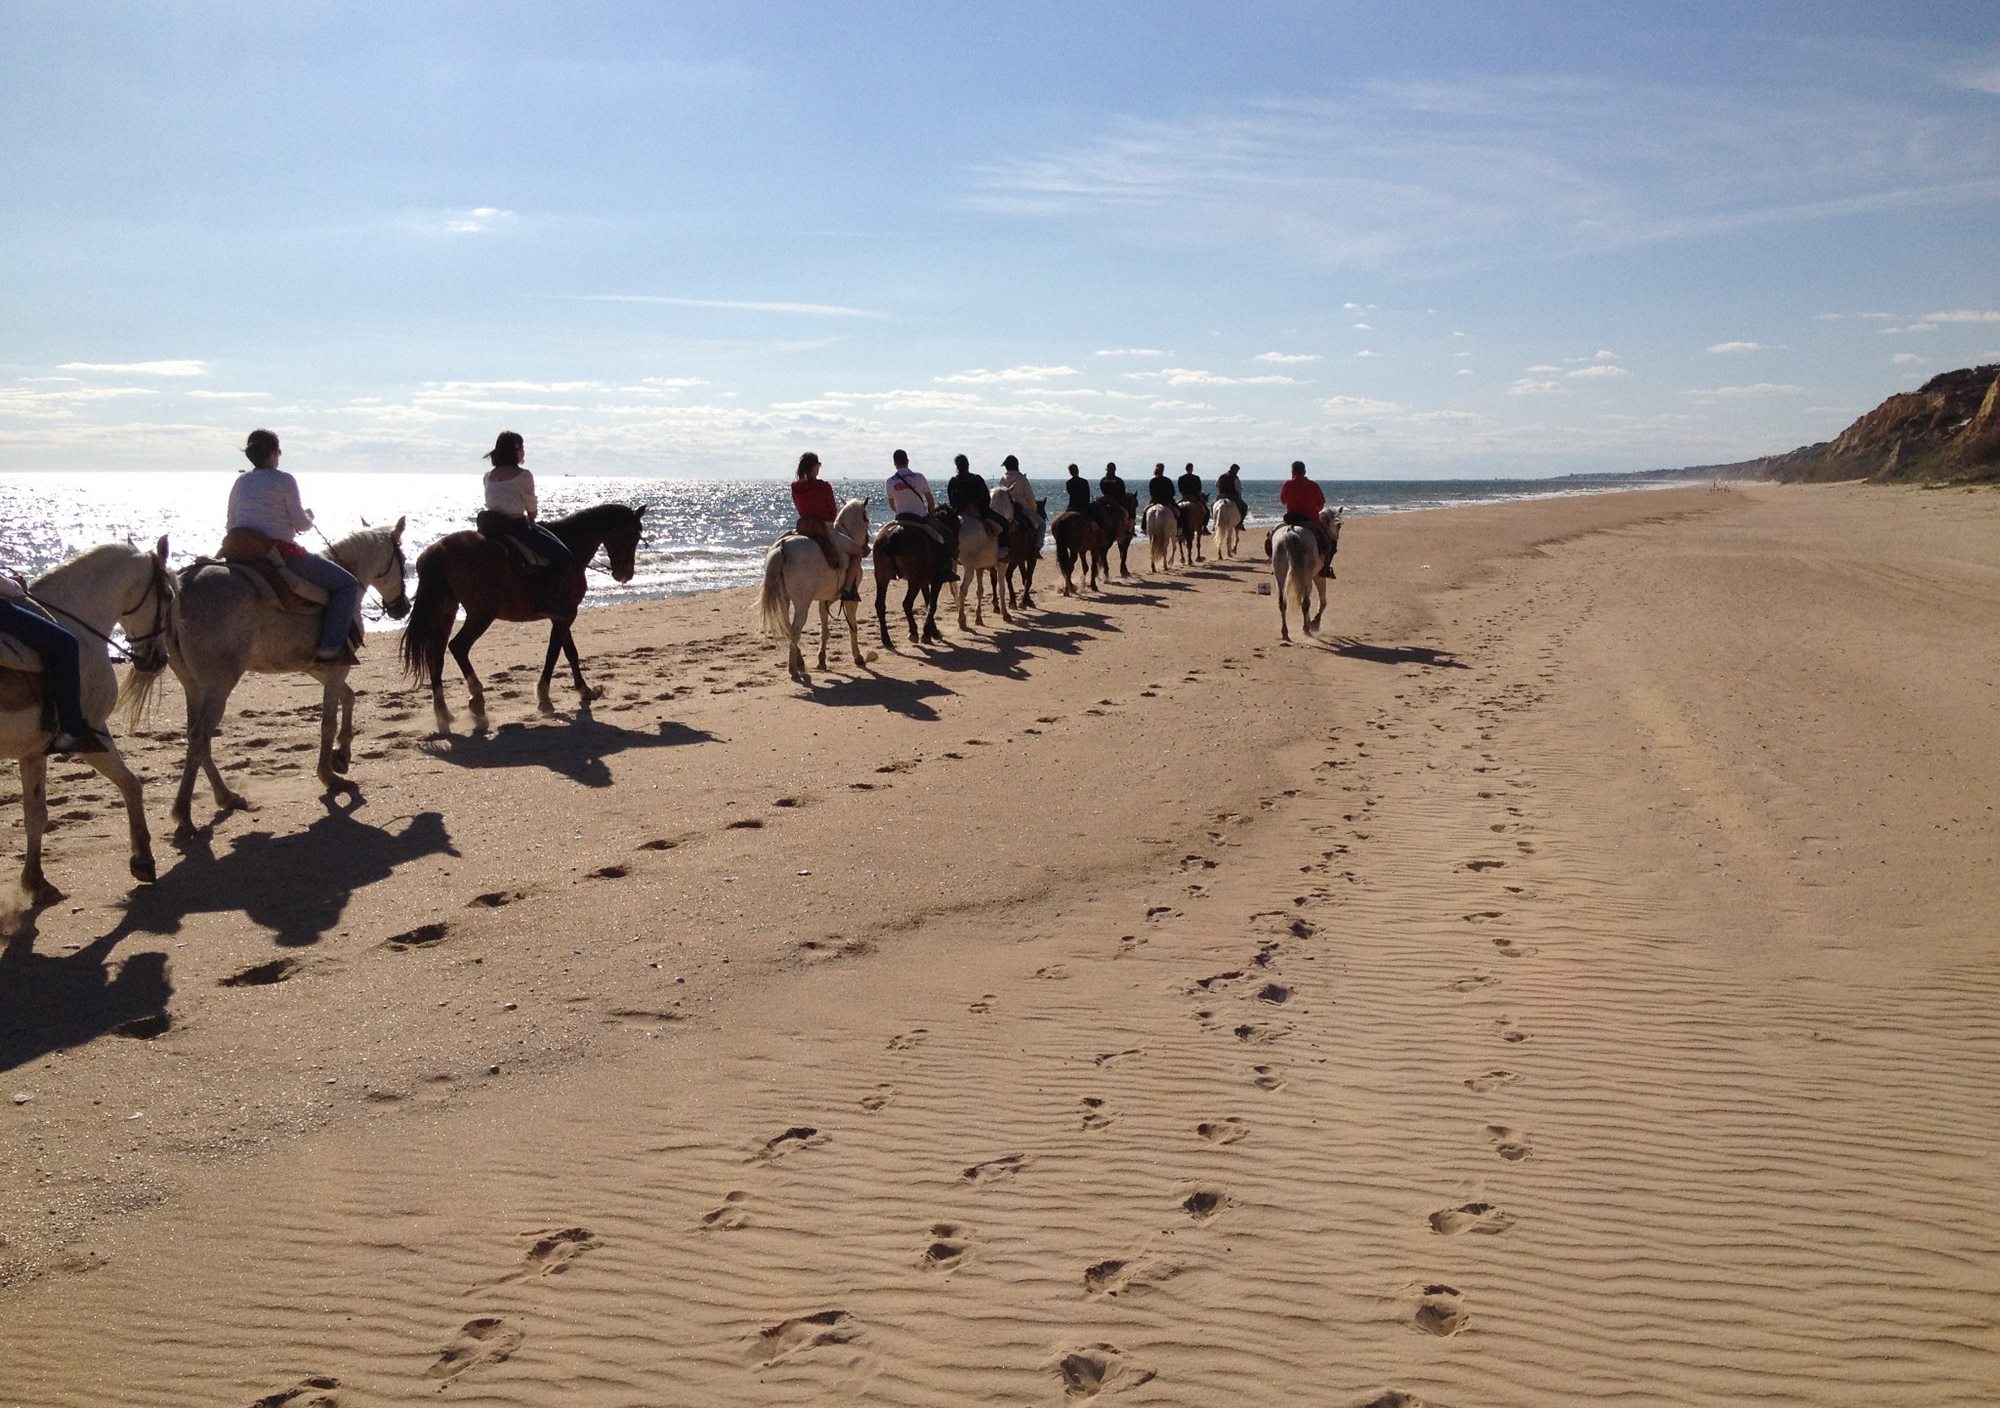 Visitar Doñana playas dunas y coto a caballo, visitas guiadas a caballo por Doñana playas dunas y coto, tours guiados a caballo por Doñana playas dunas y coto, excursión a caballo por Doñana playas dunas y coto, Rutas a caballo por Doñana playas dunas y coto